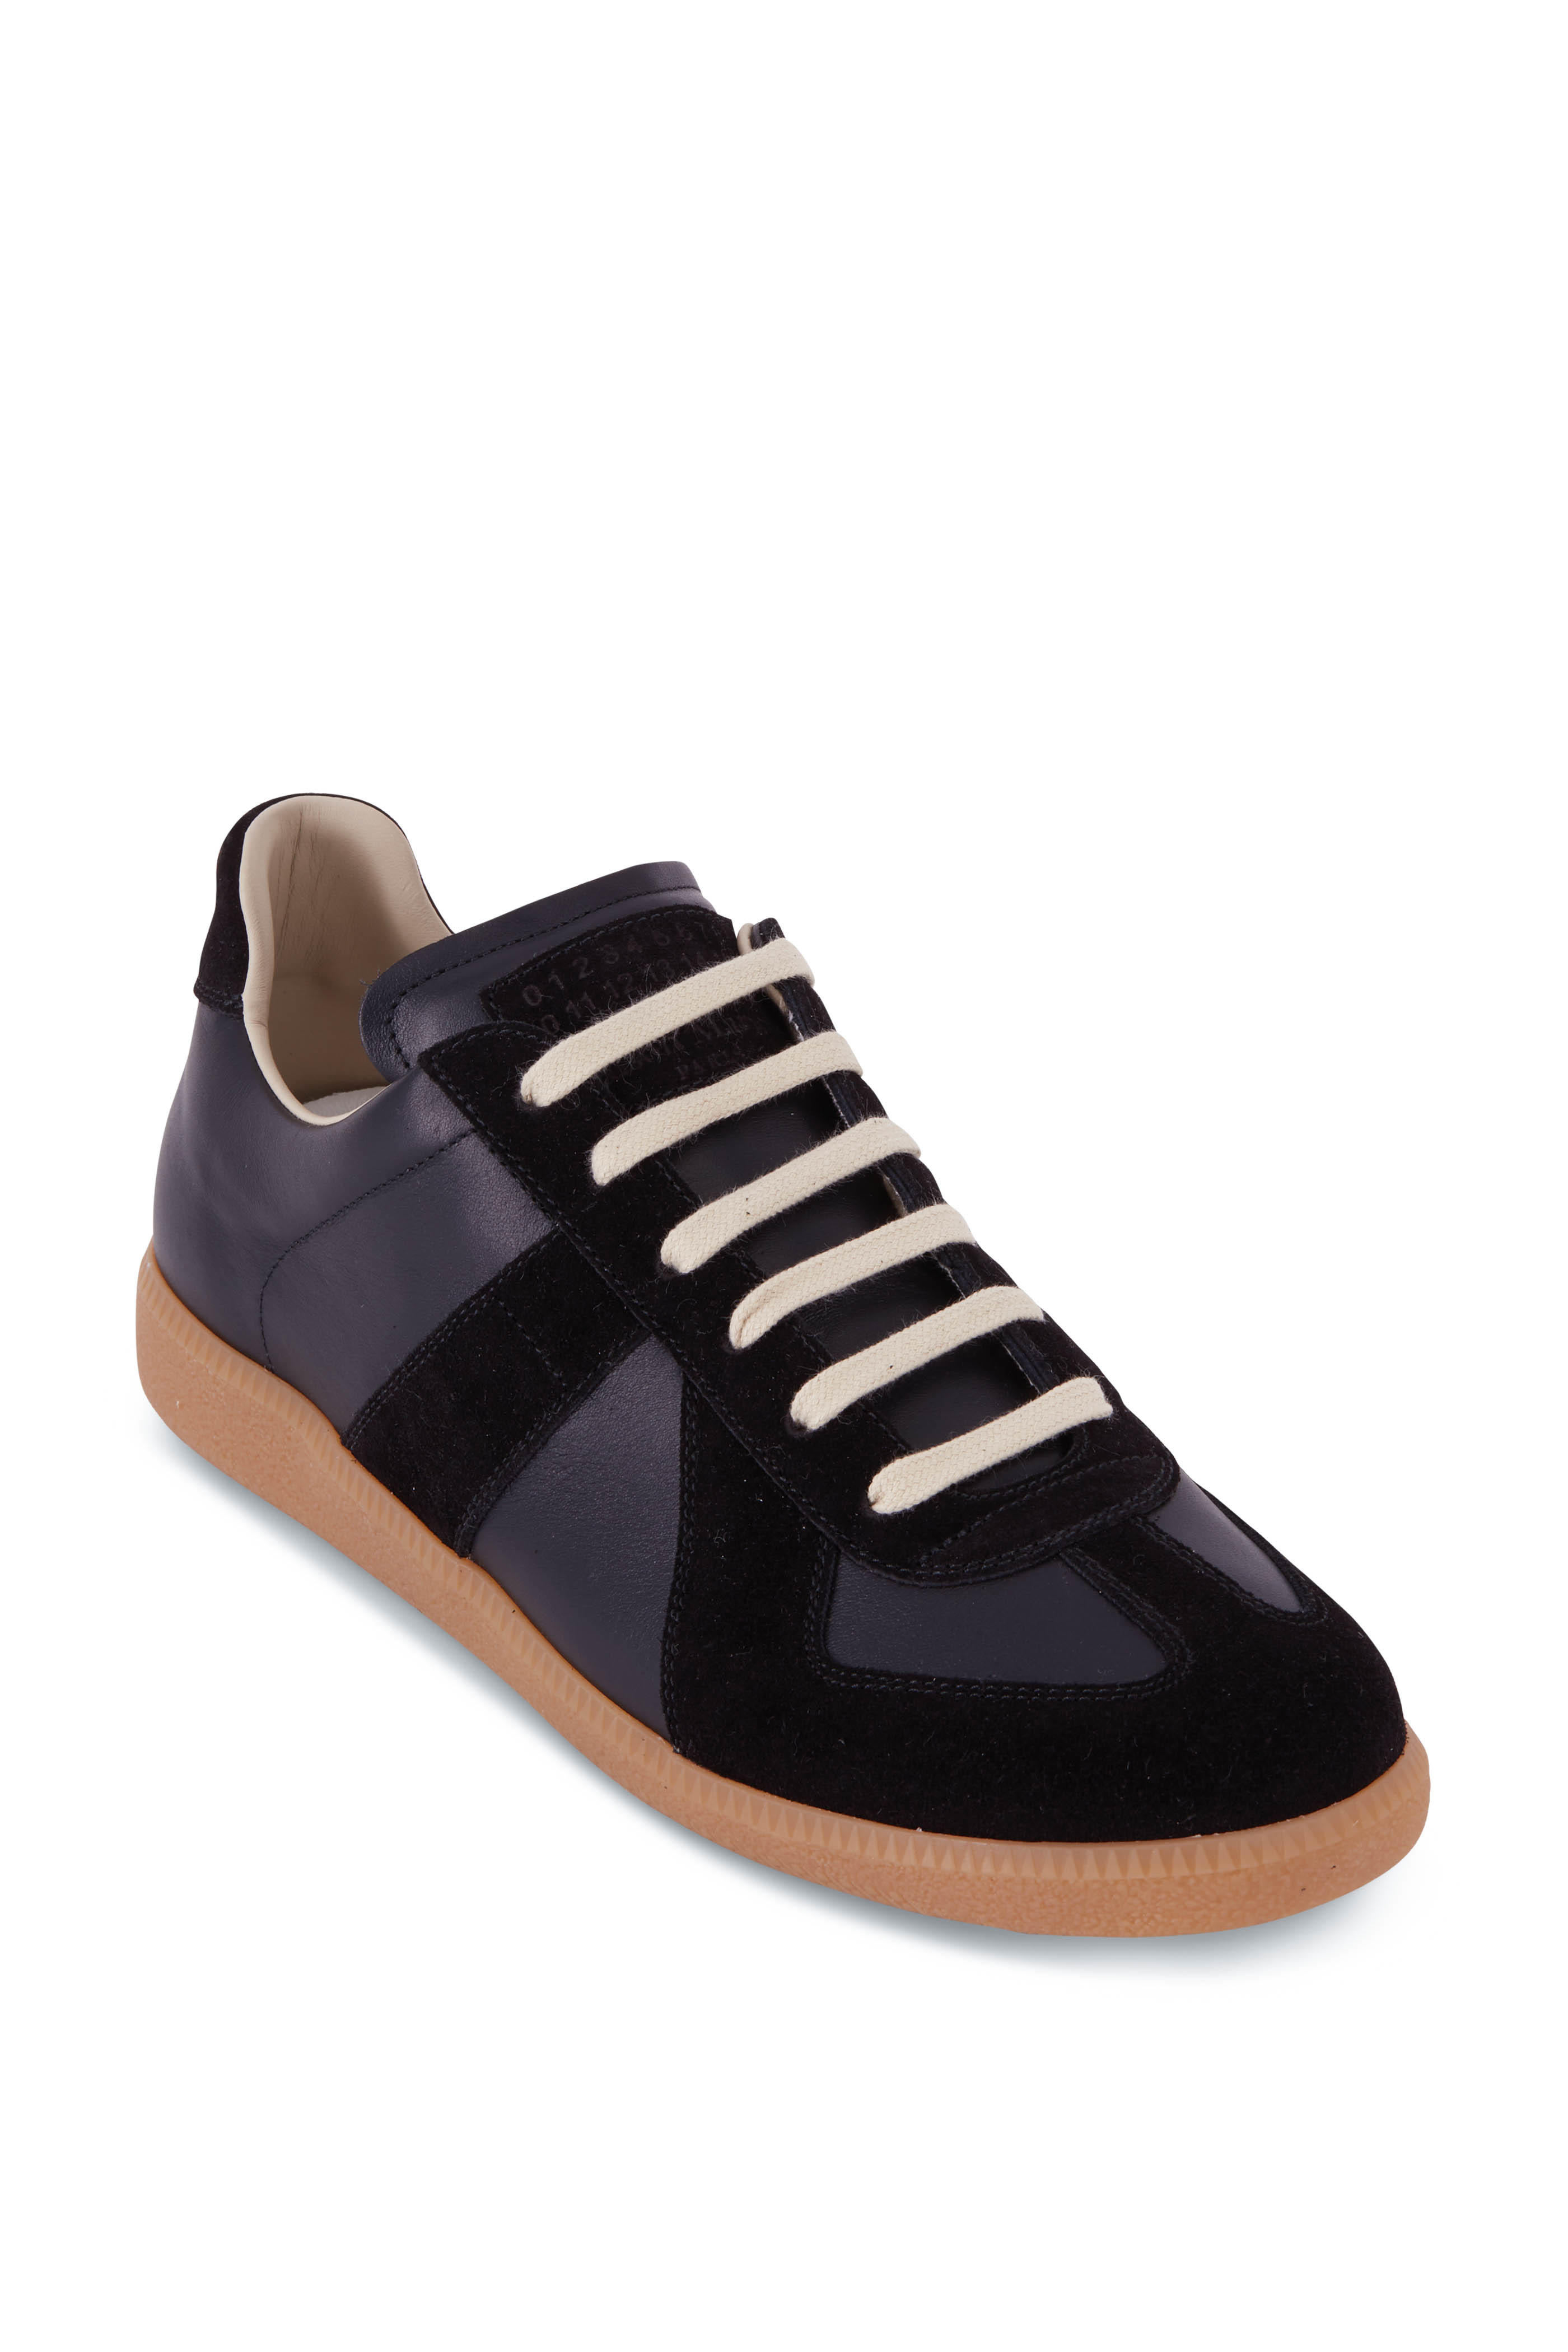 Replica Black Leather & Suede Low Top Sneaker